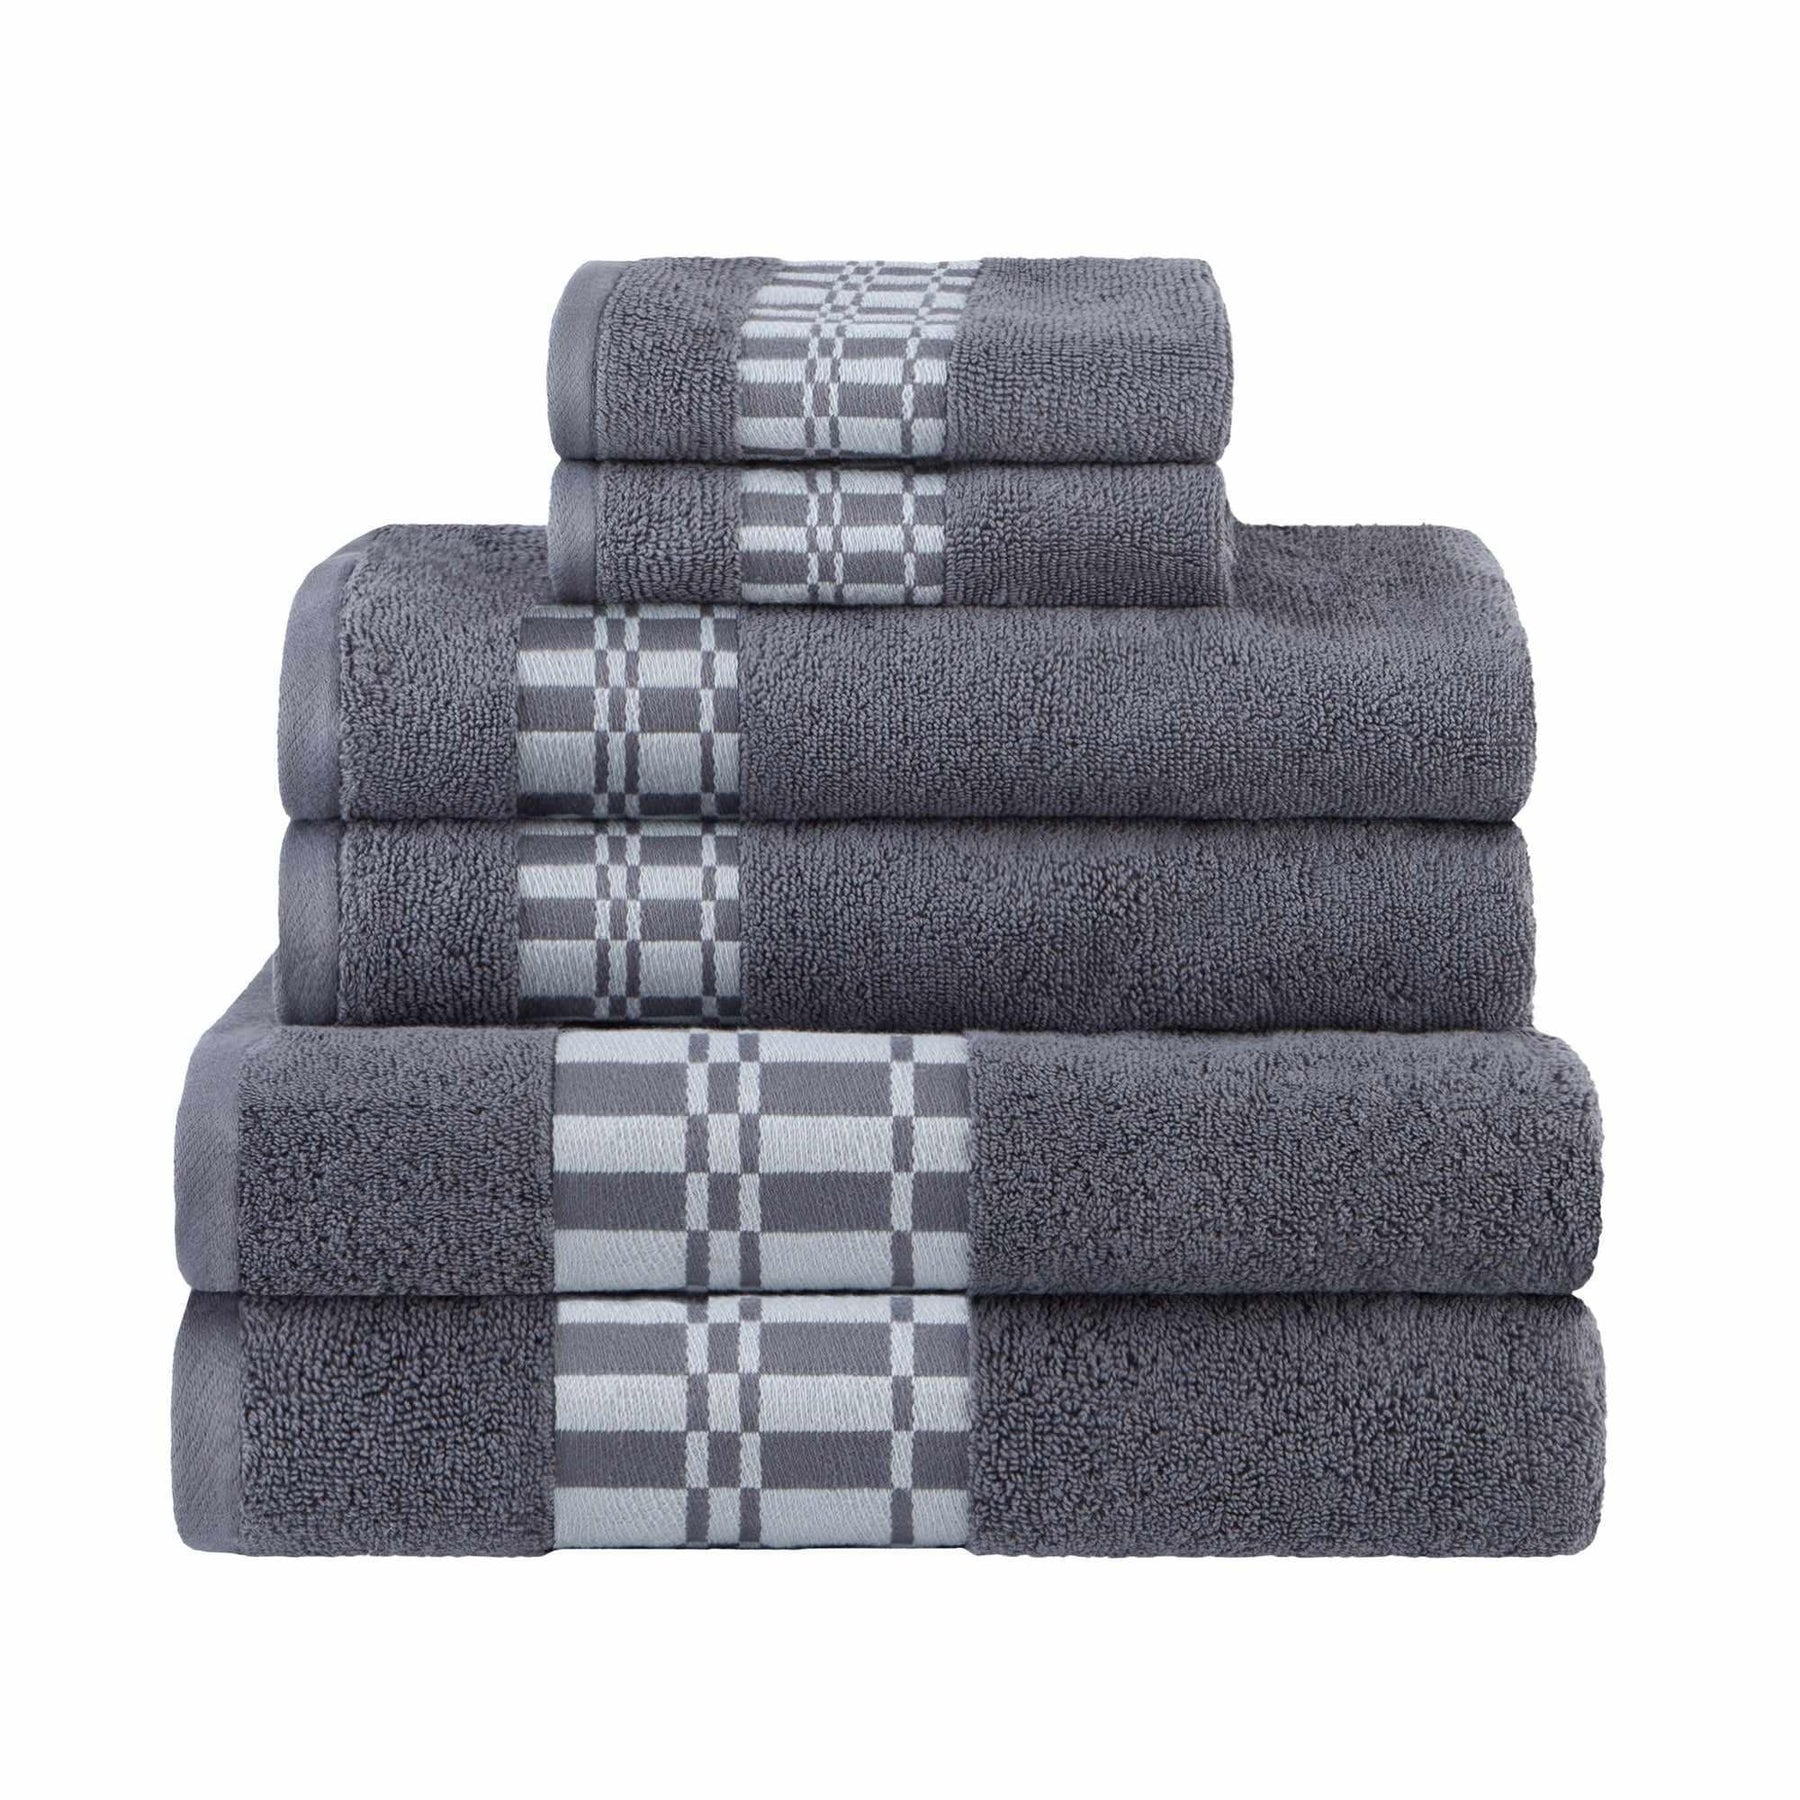 Superior Larissa Cotton 6-Piece Assorted Towel Set with Geometric Embroidered Jacquard Border  - Grey